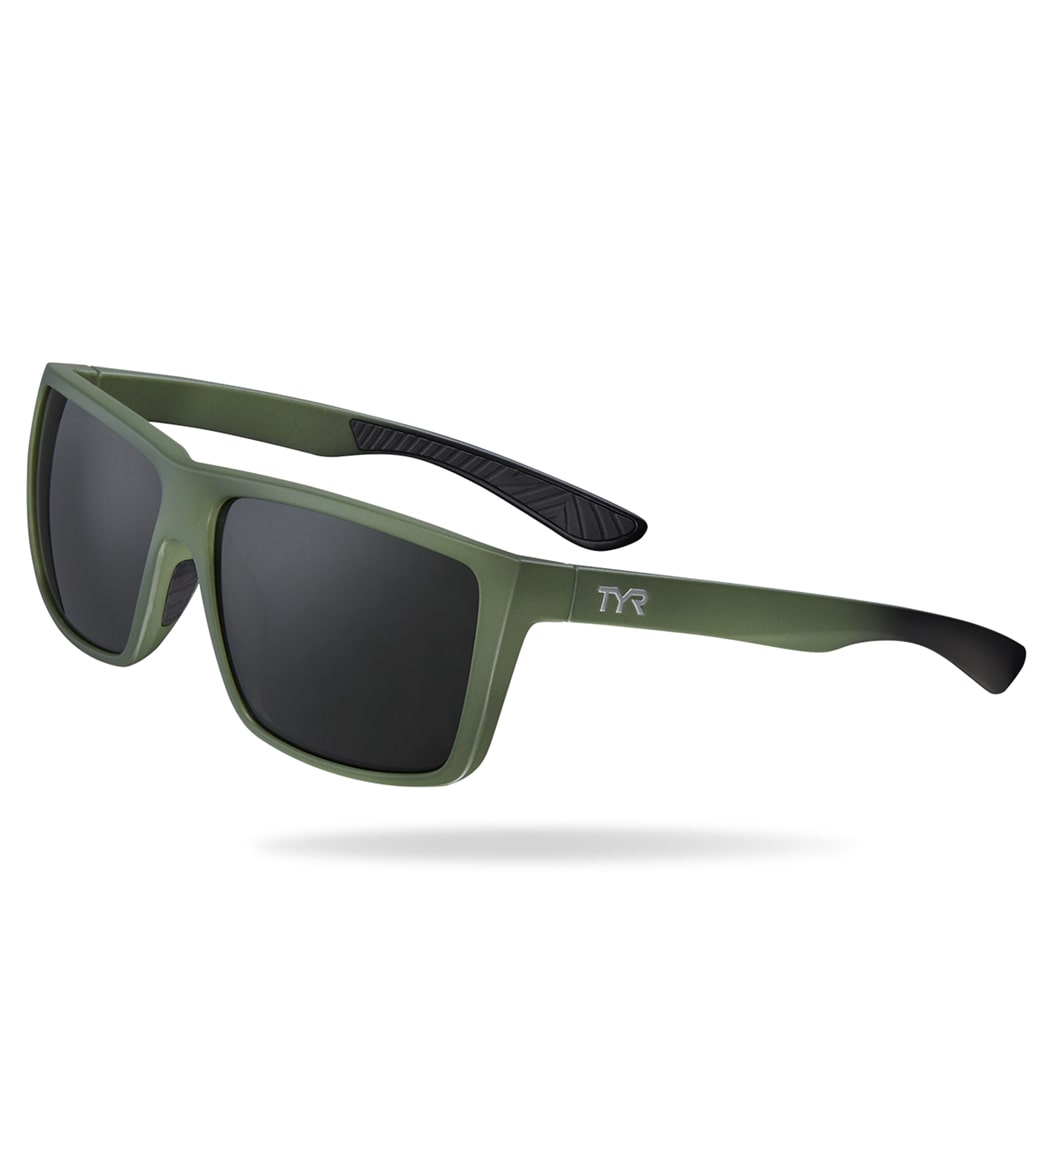 TYR Men's Ventura Sport Sunglasses - Smoke/Green - Swimoutlet.com